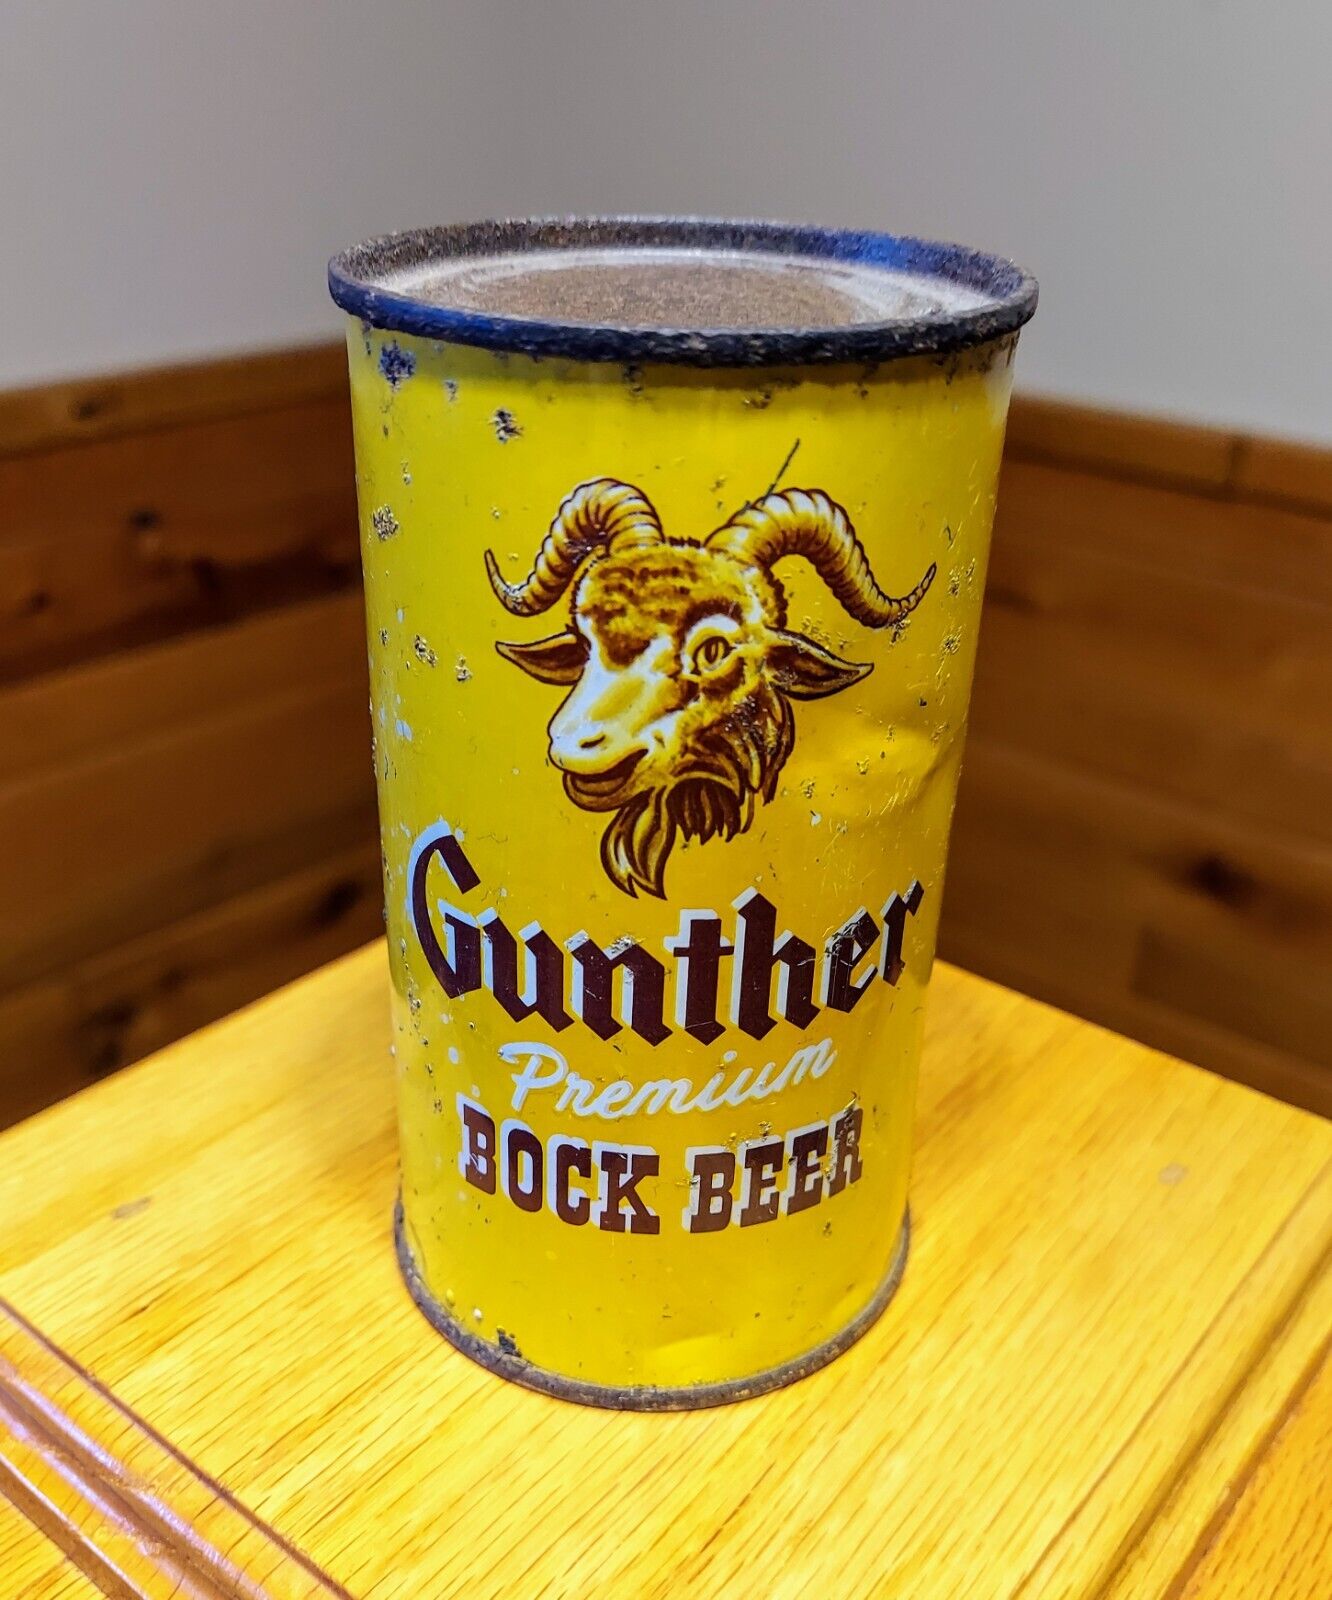 Gunther Premium Bock Beer Flat Top Beer Can - Tough Can